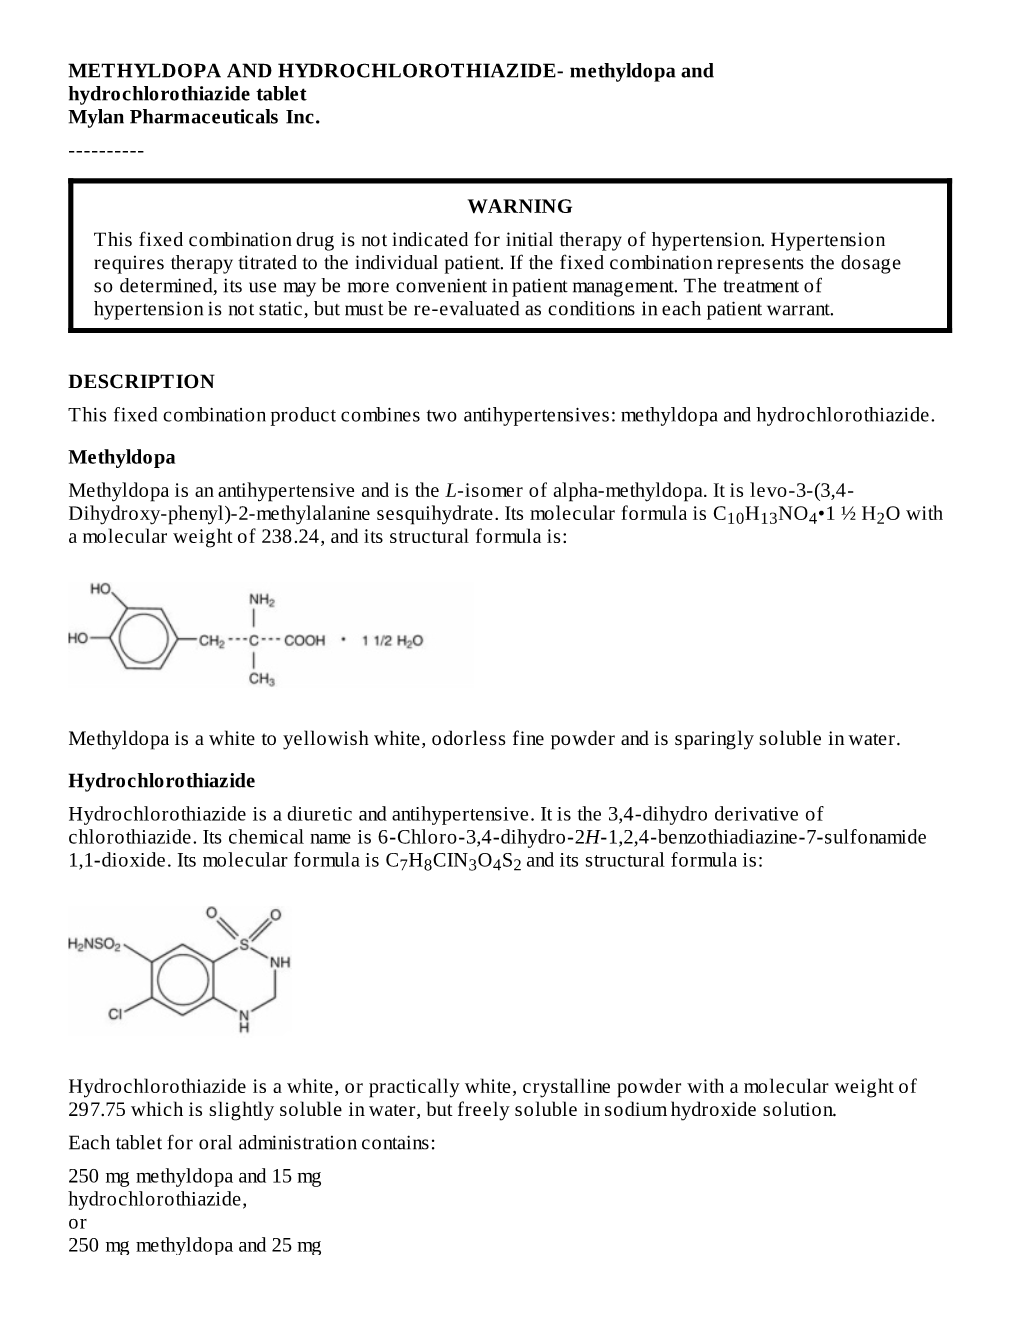 METHYLDOPA and HYDROCHLOROTHIAZIDE- Methyldopa and Hydrochlorothiazide Tablet Mylan Pharmaceuticals Inc